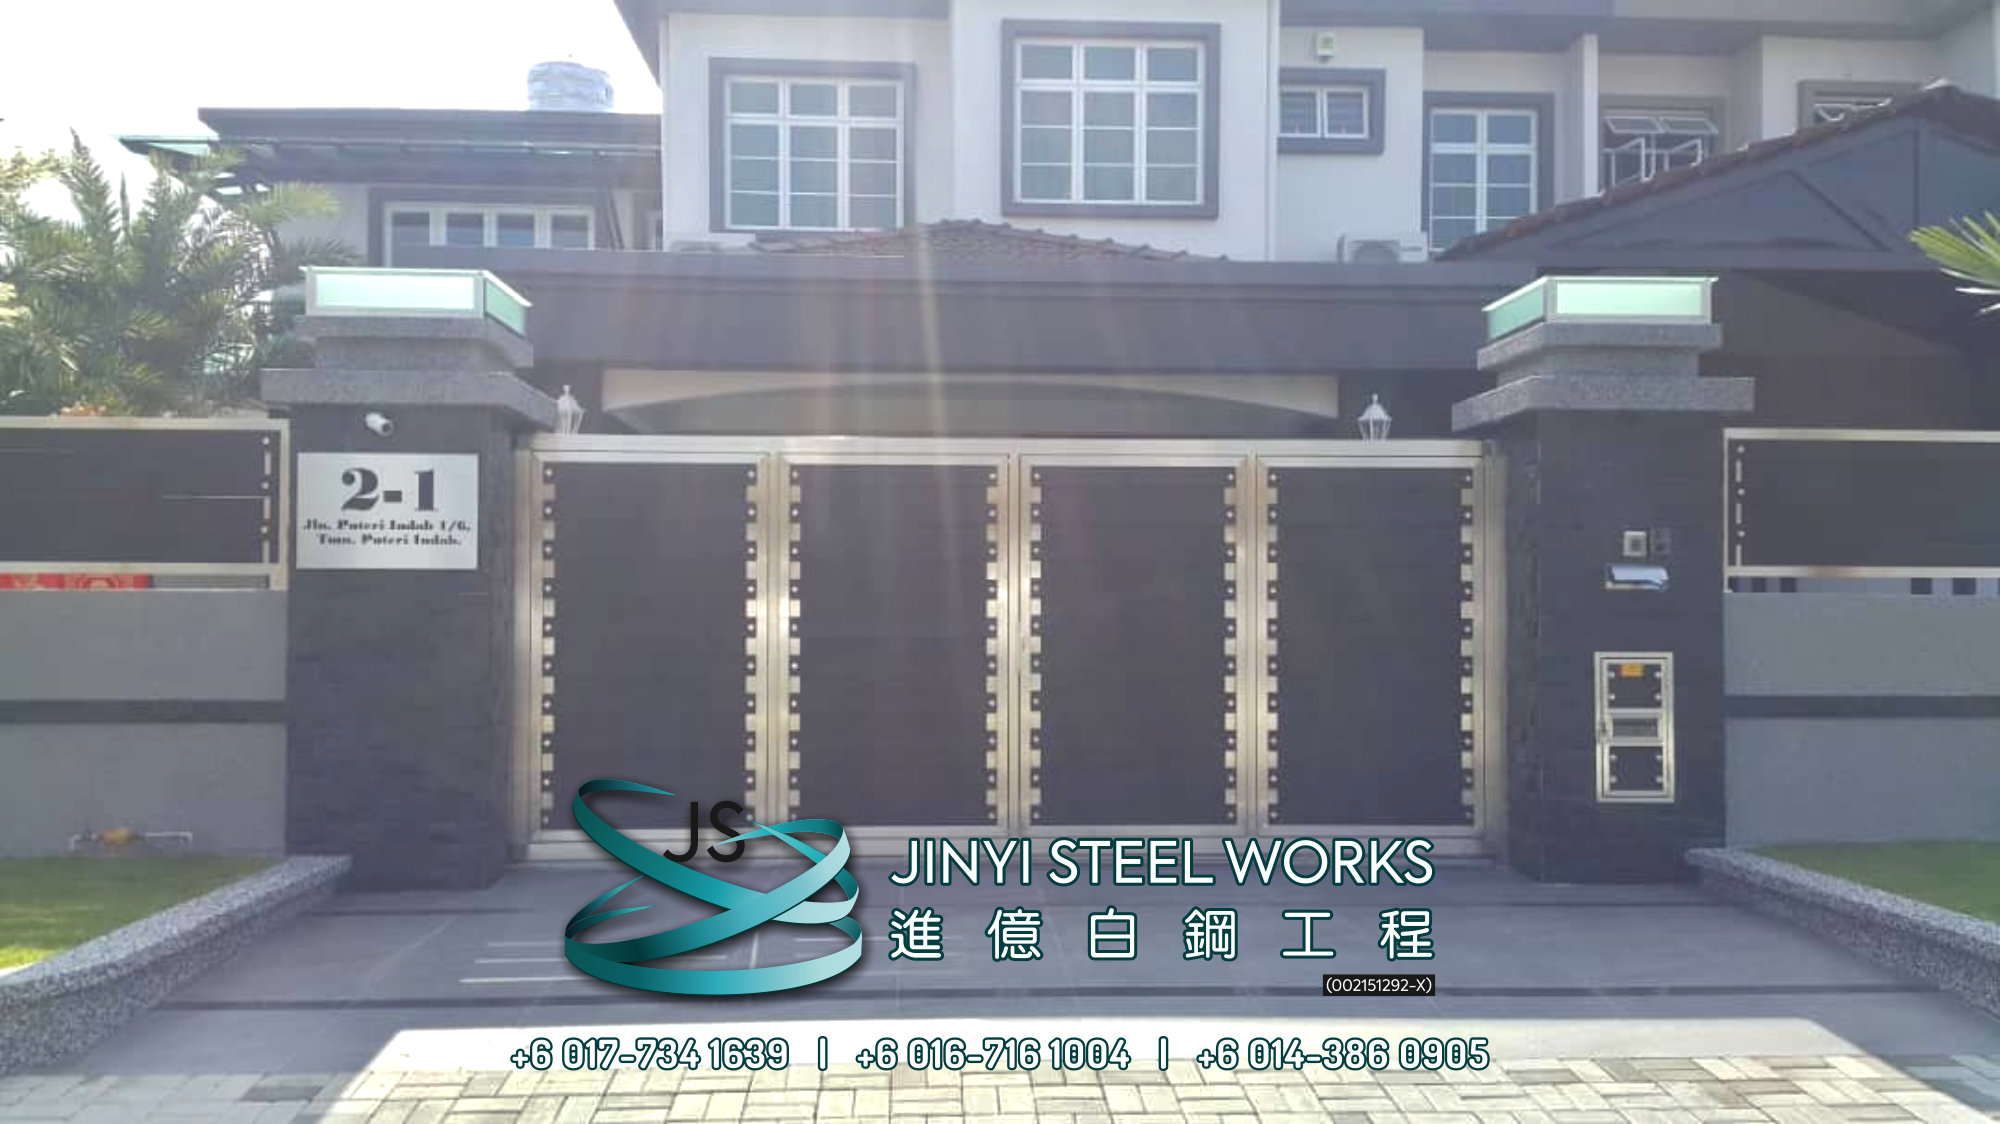 Jinyi Steel Works 铁与不锈钢产品制造商 为您定制钢铁产品与安装 柔佛 马六甲 森美兰 吉隆坡 雪兰莪 彭亨 峇株巴辖 不锈钢制造商 B17